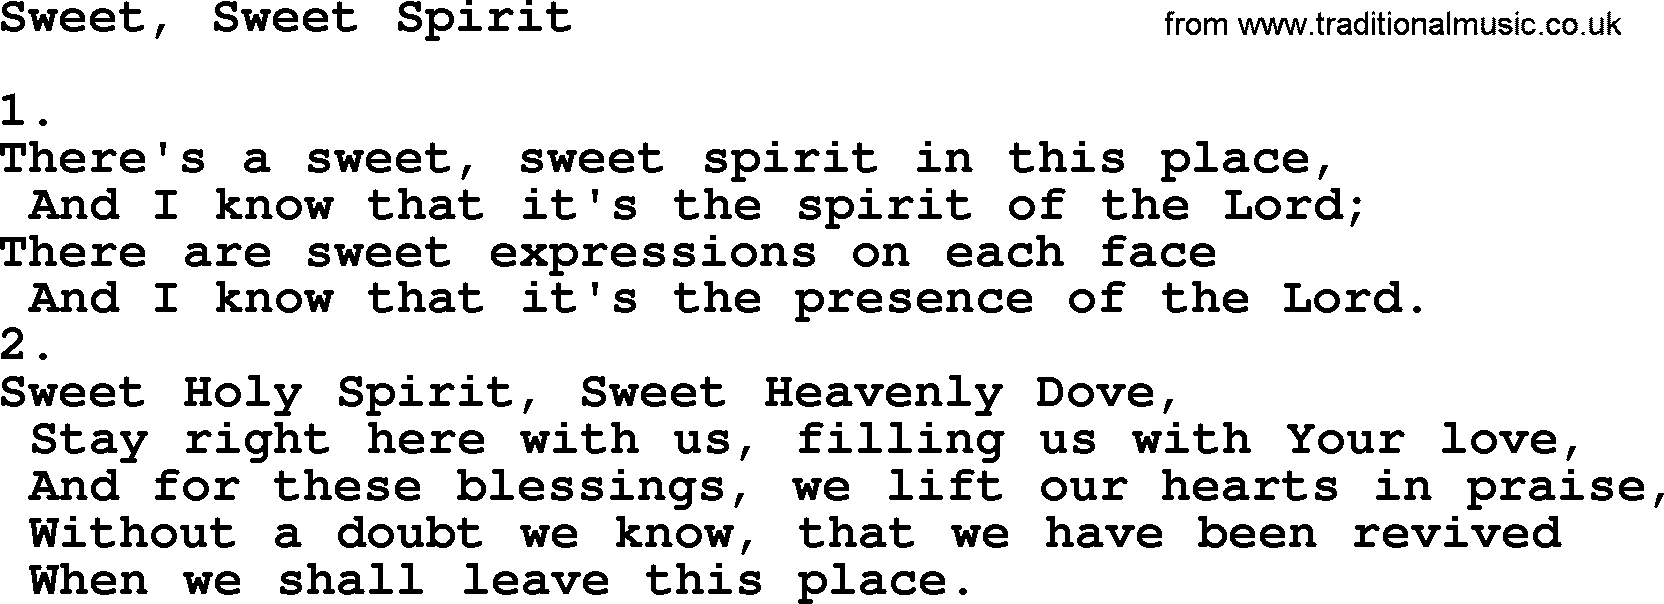 Apostolic & Pentecostal Hymns and Songs, Hymn: Sweet, Sweet Spirit lyrics and PDF